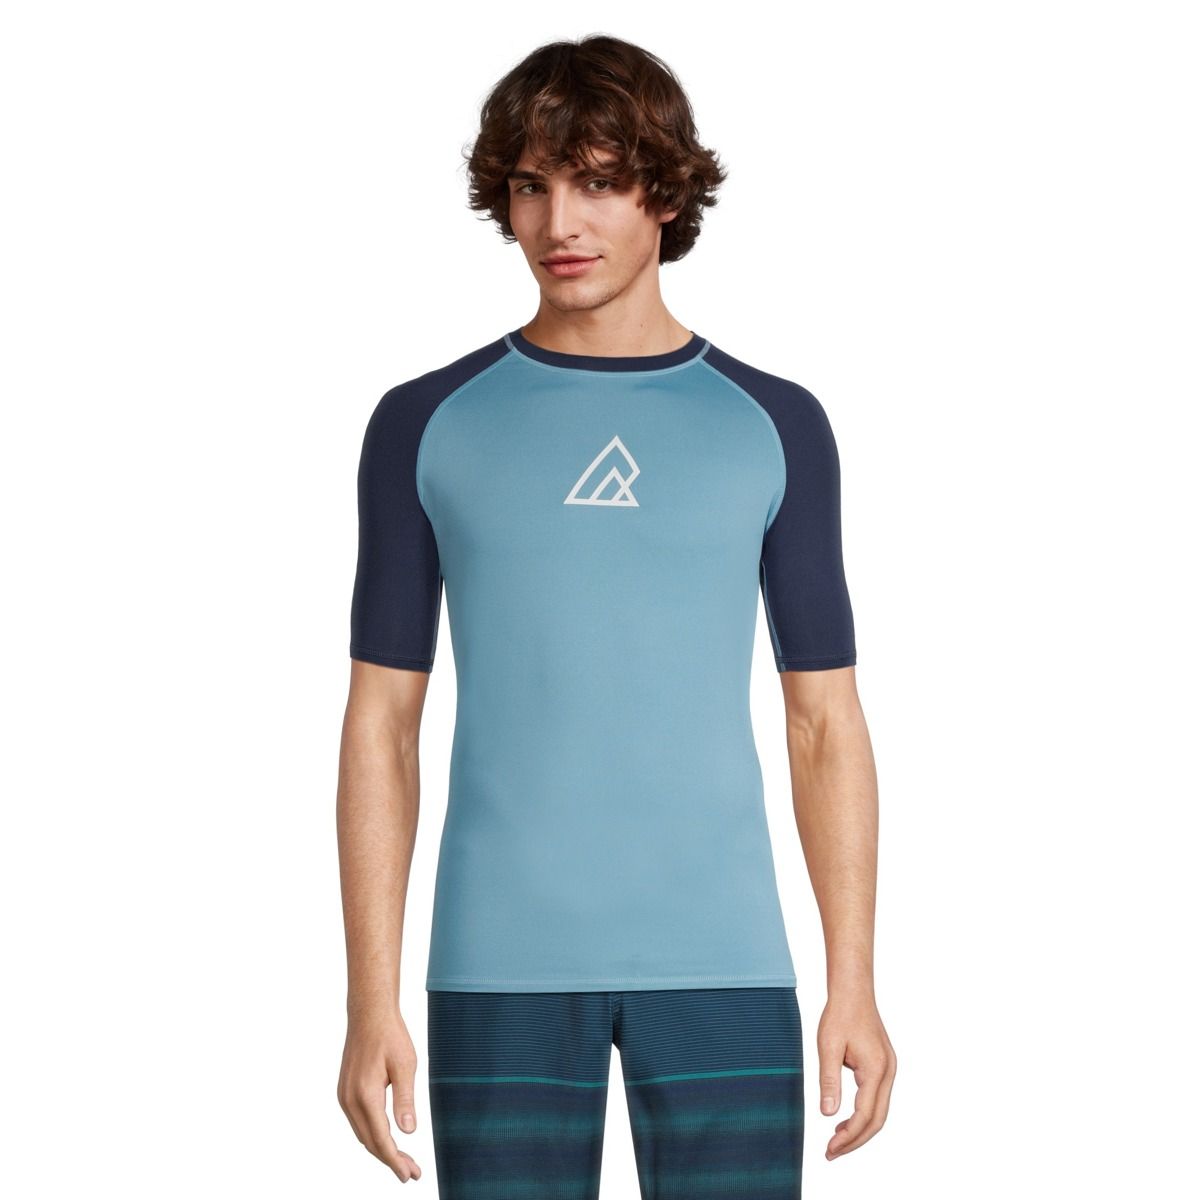 Image of Ripzone Men's Laine 2.0 Swim T Shirt